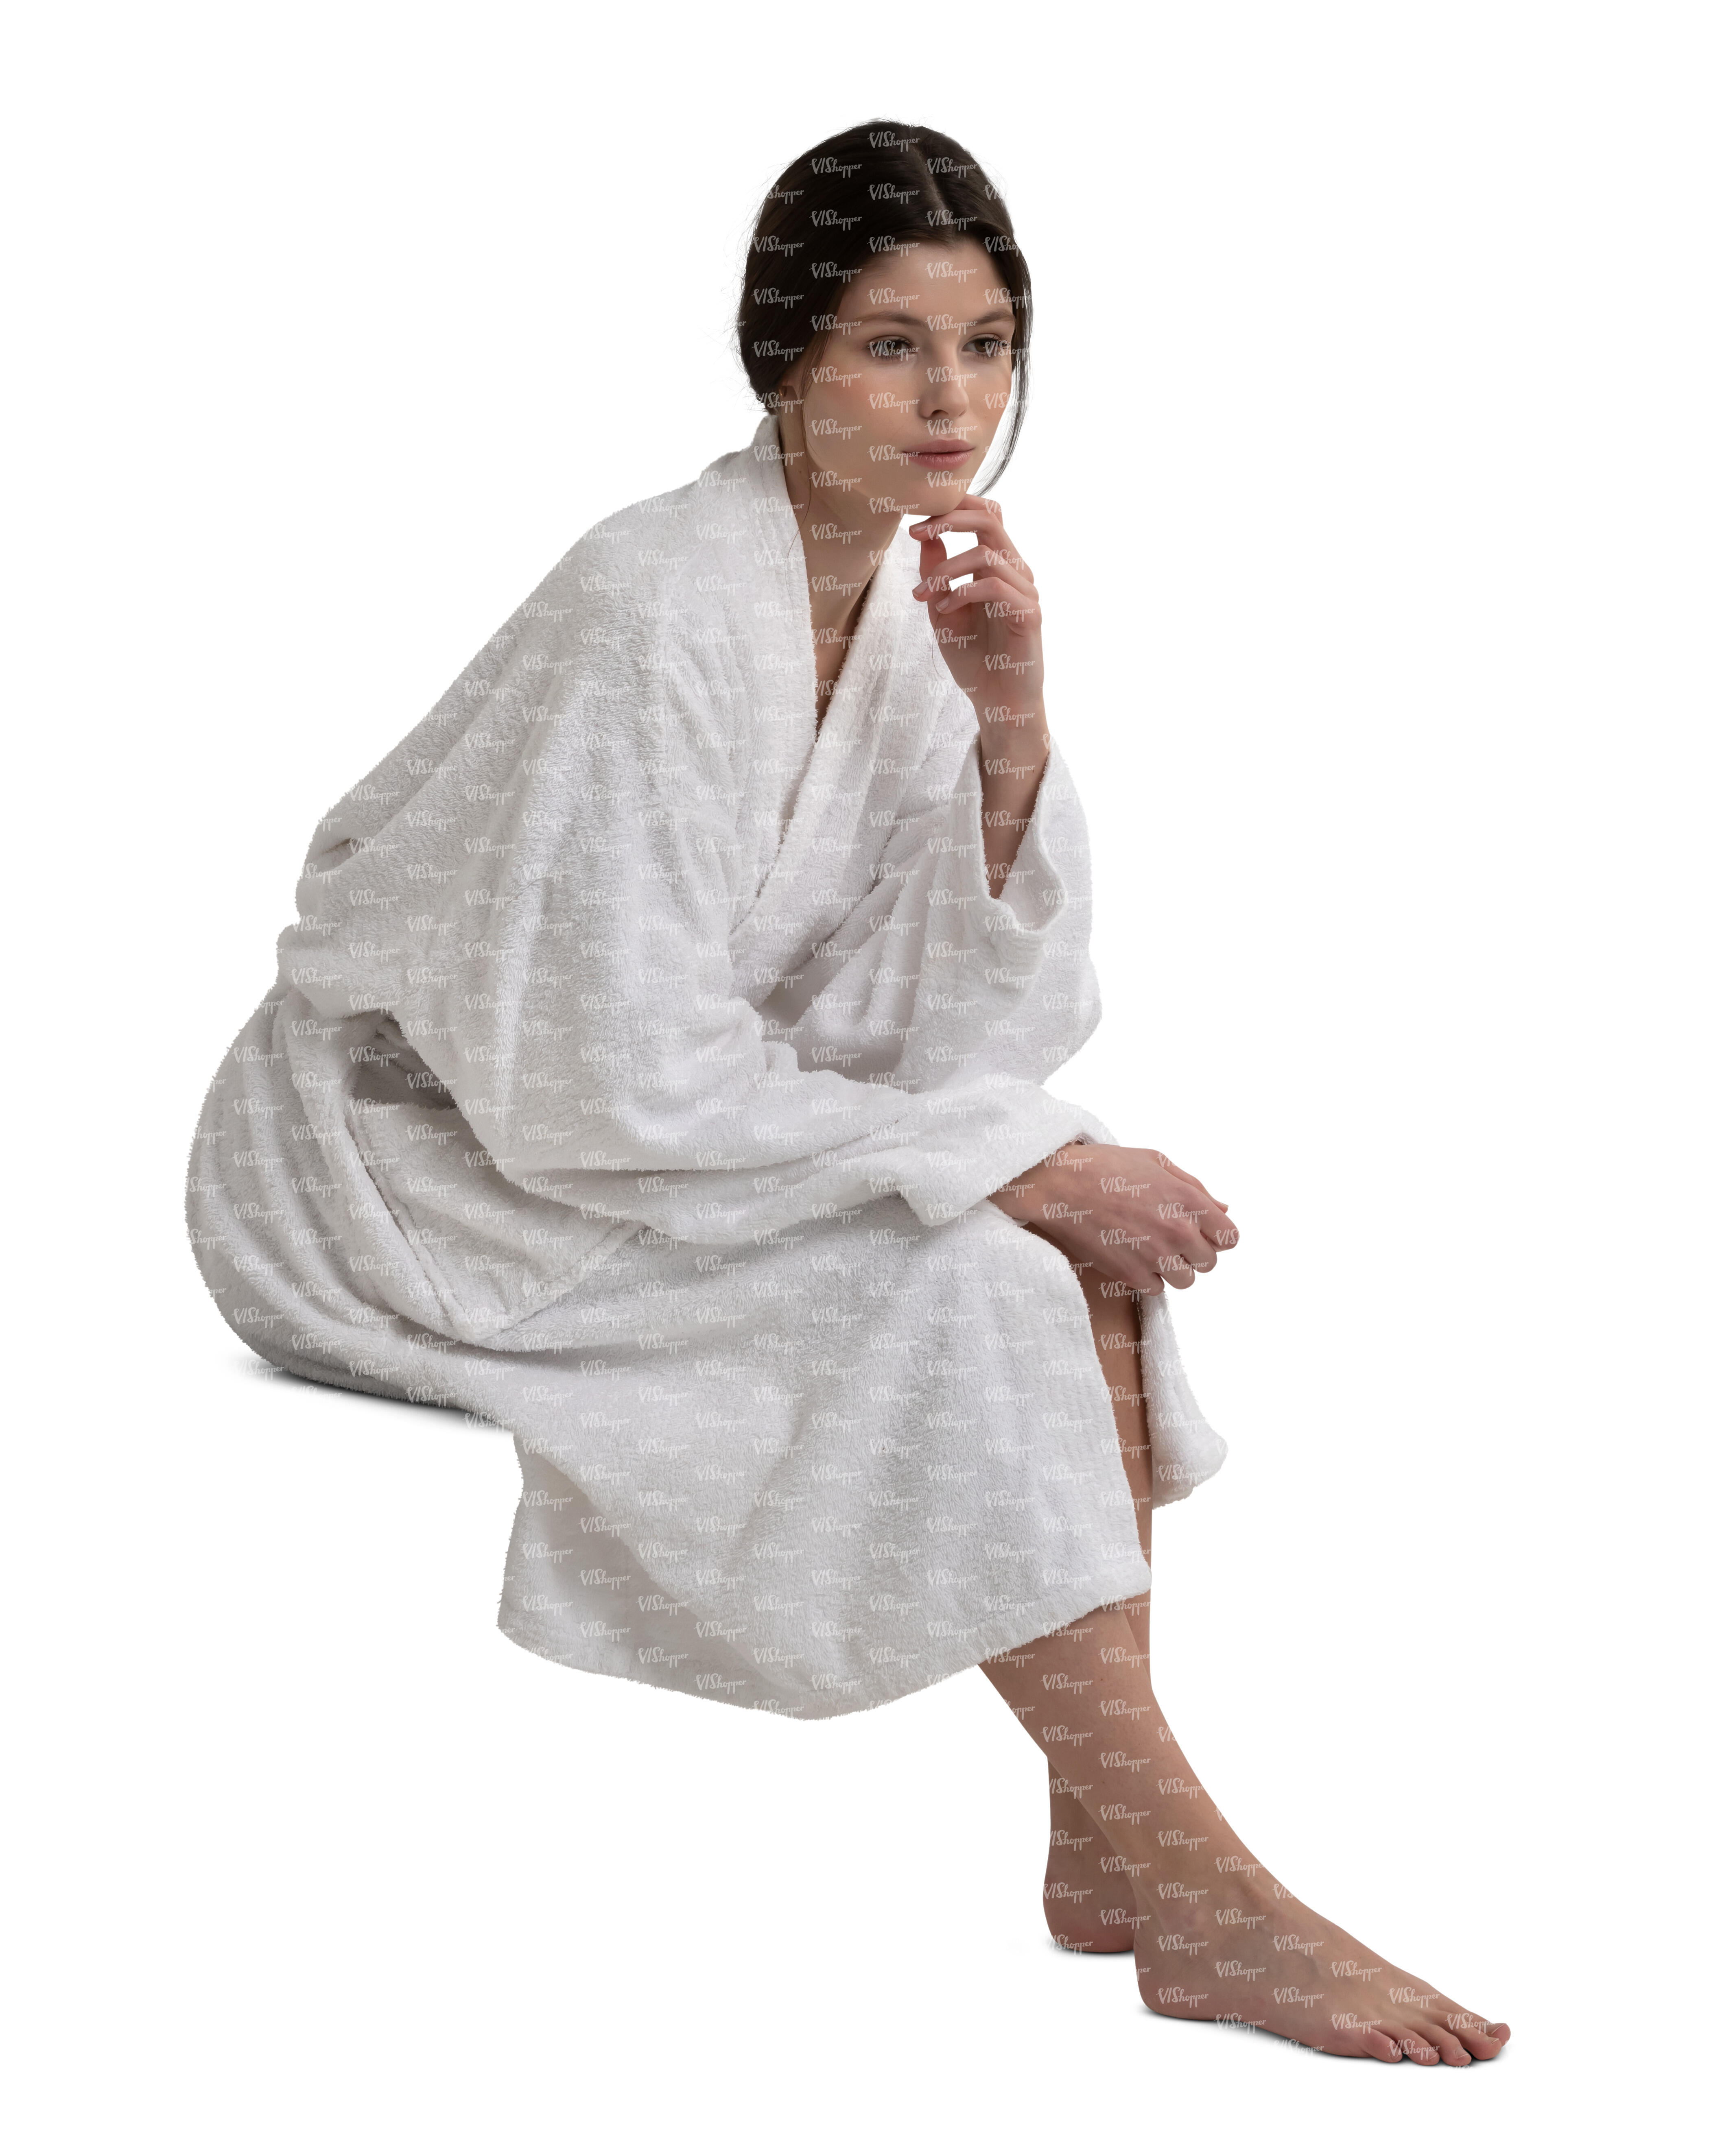 Cut Out Woman In A White Bathrobe Sitting Vishopper